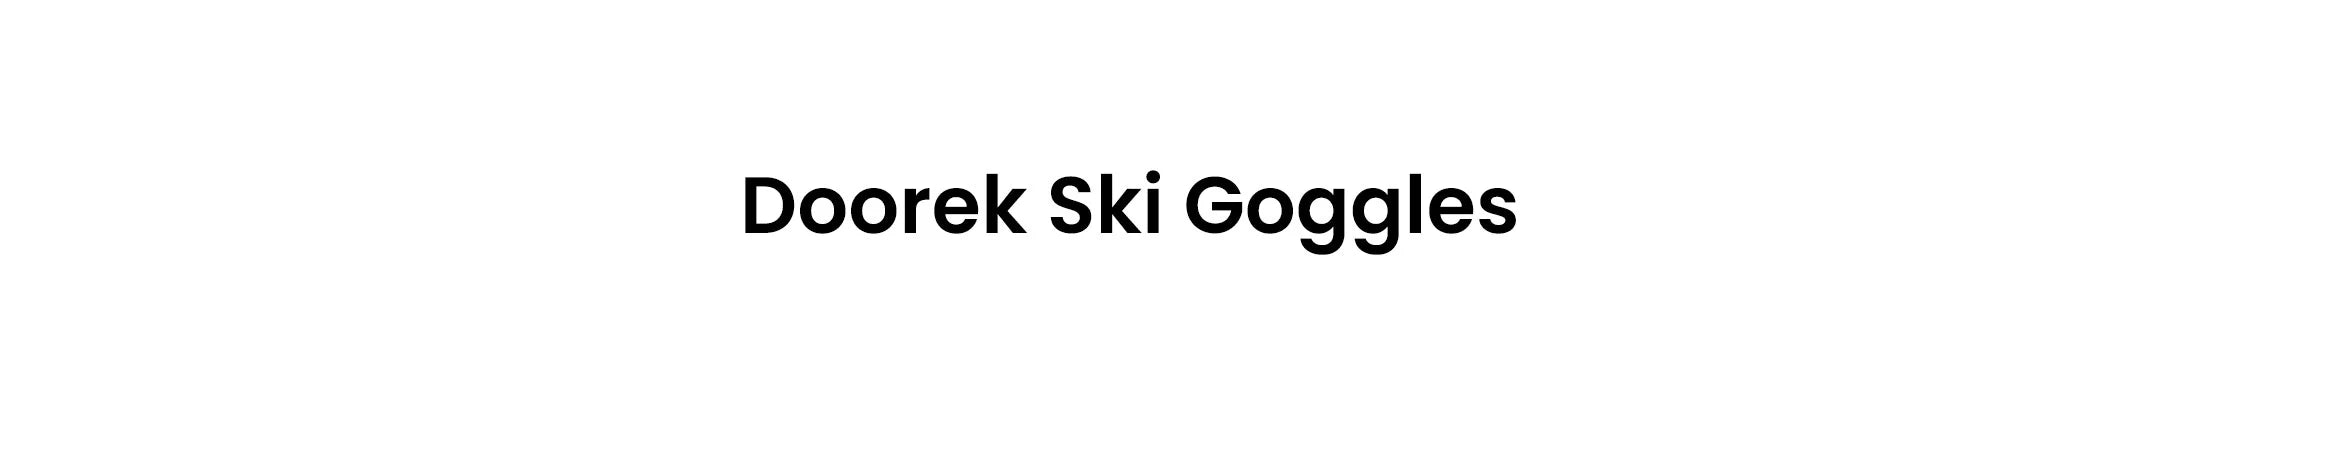 1. Doorek ski goggles